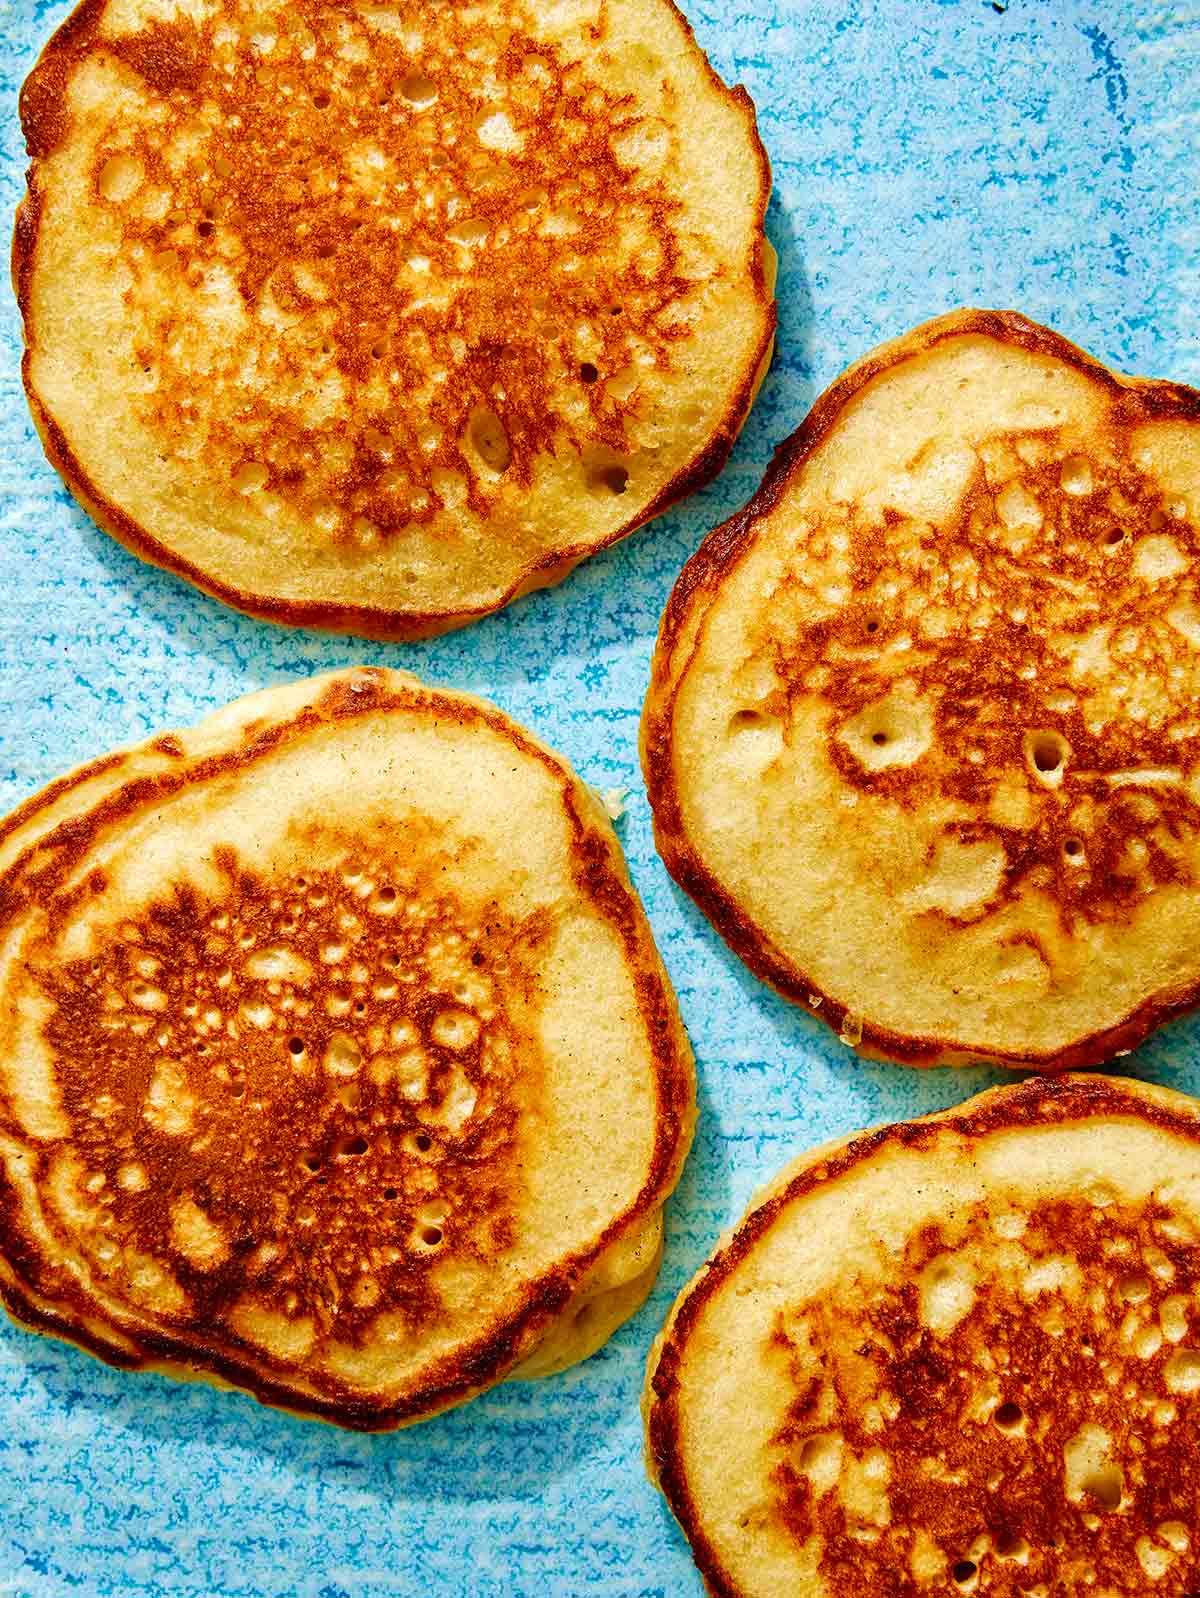 Buttermilk pancakes up close. 